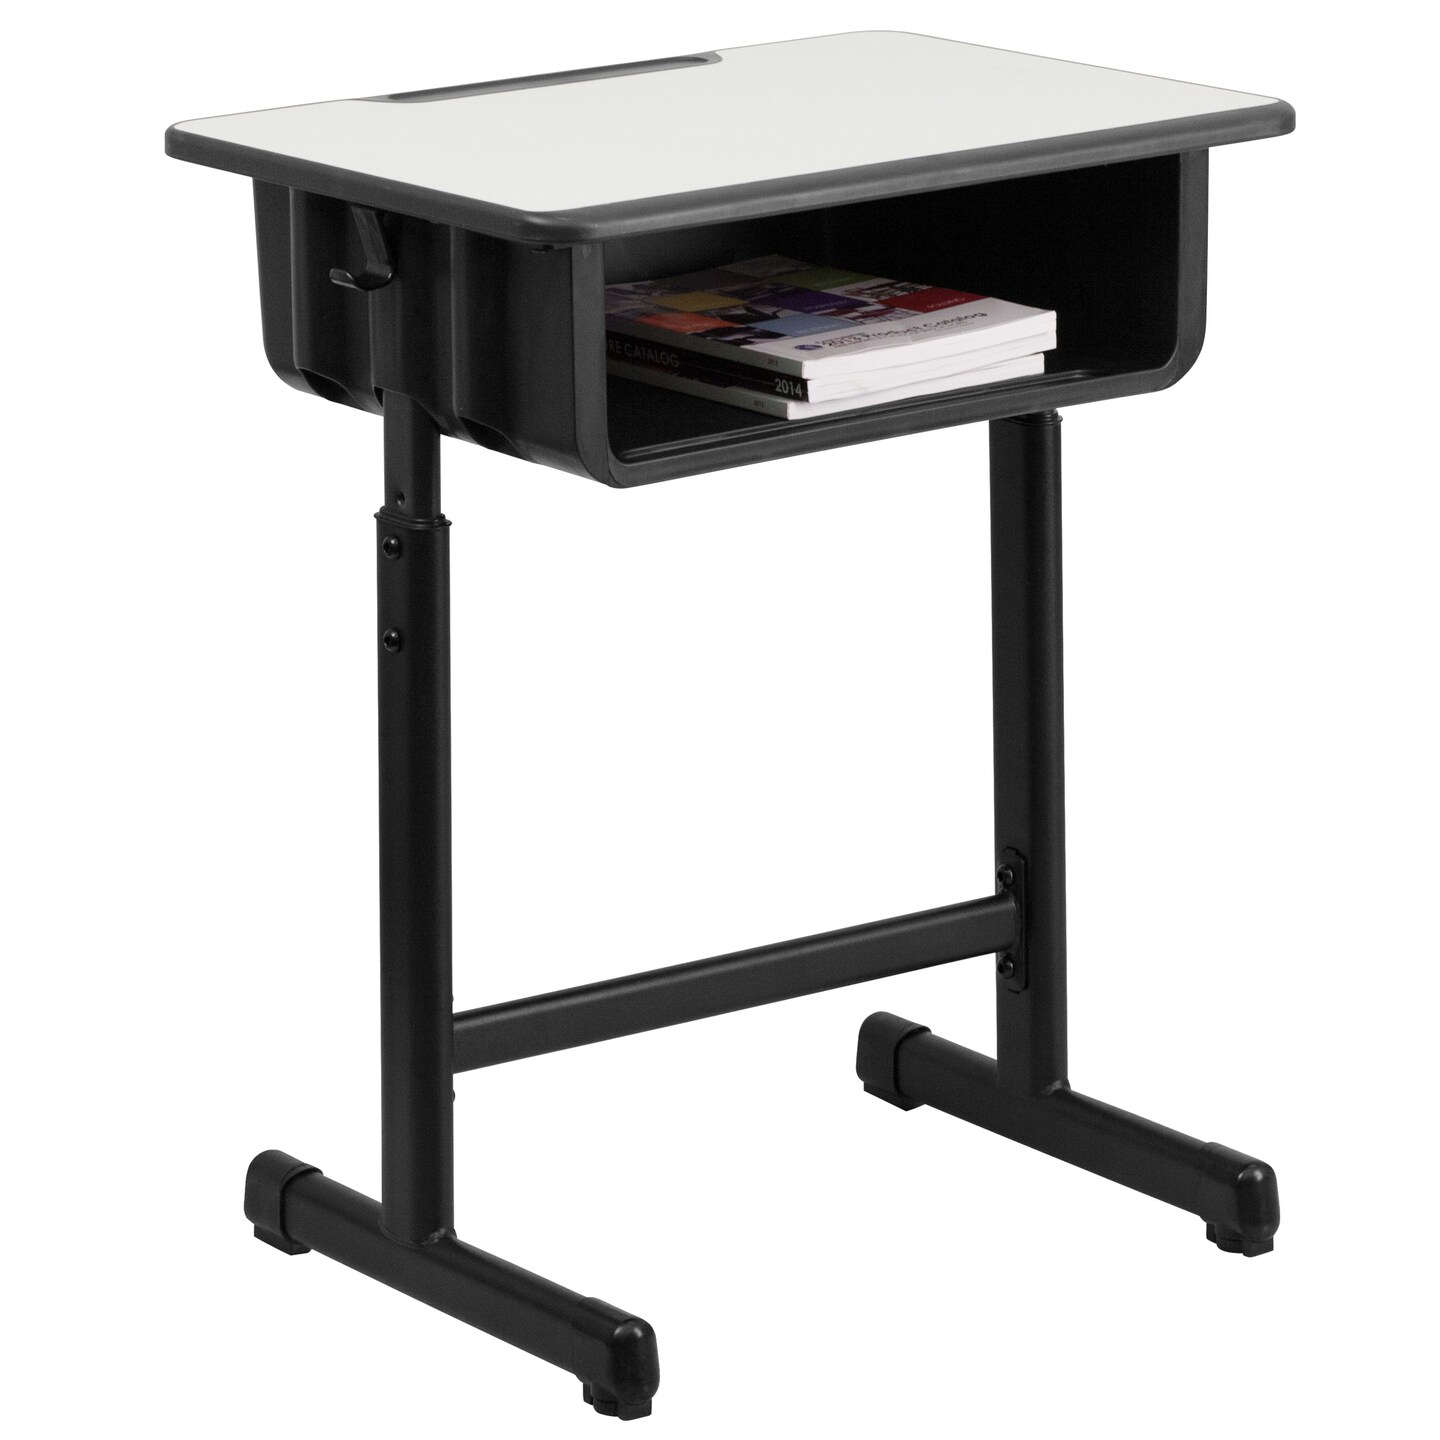 Emma and Oliver Student Desk with Top and Adjustable Height Pedestal Frame